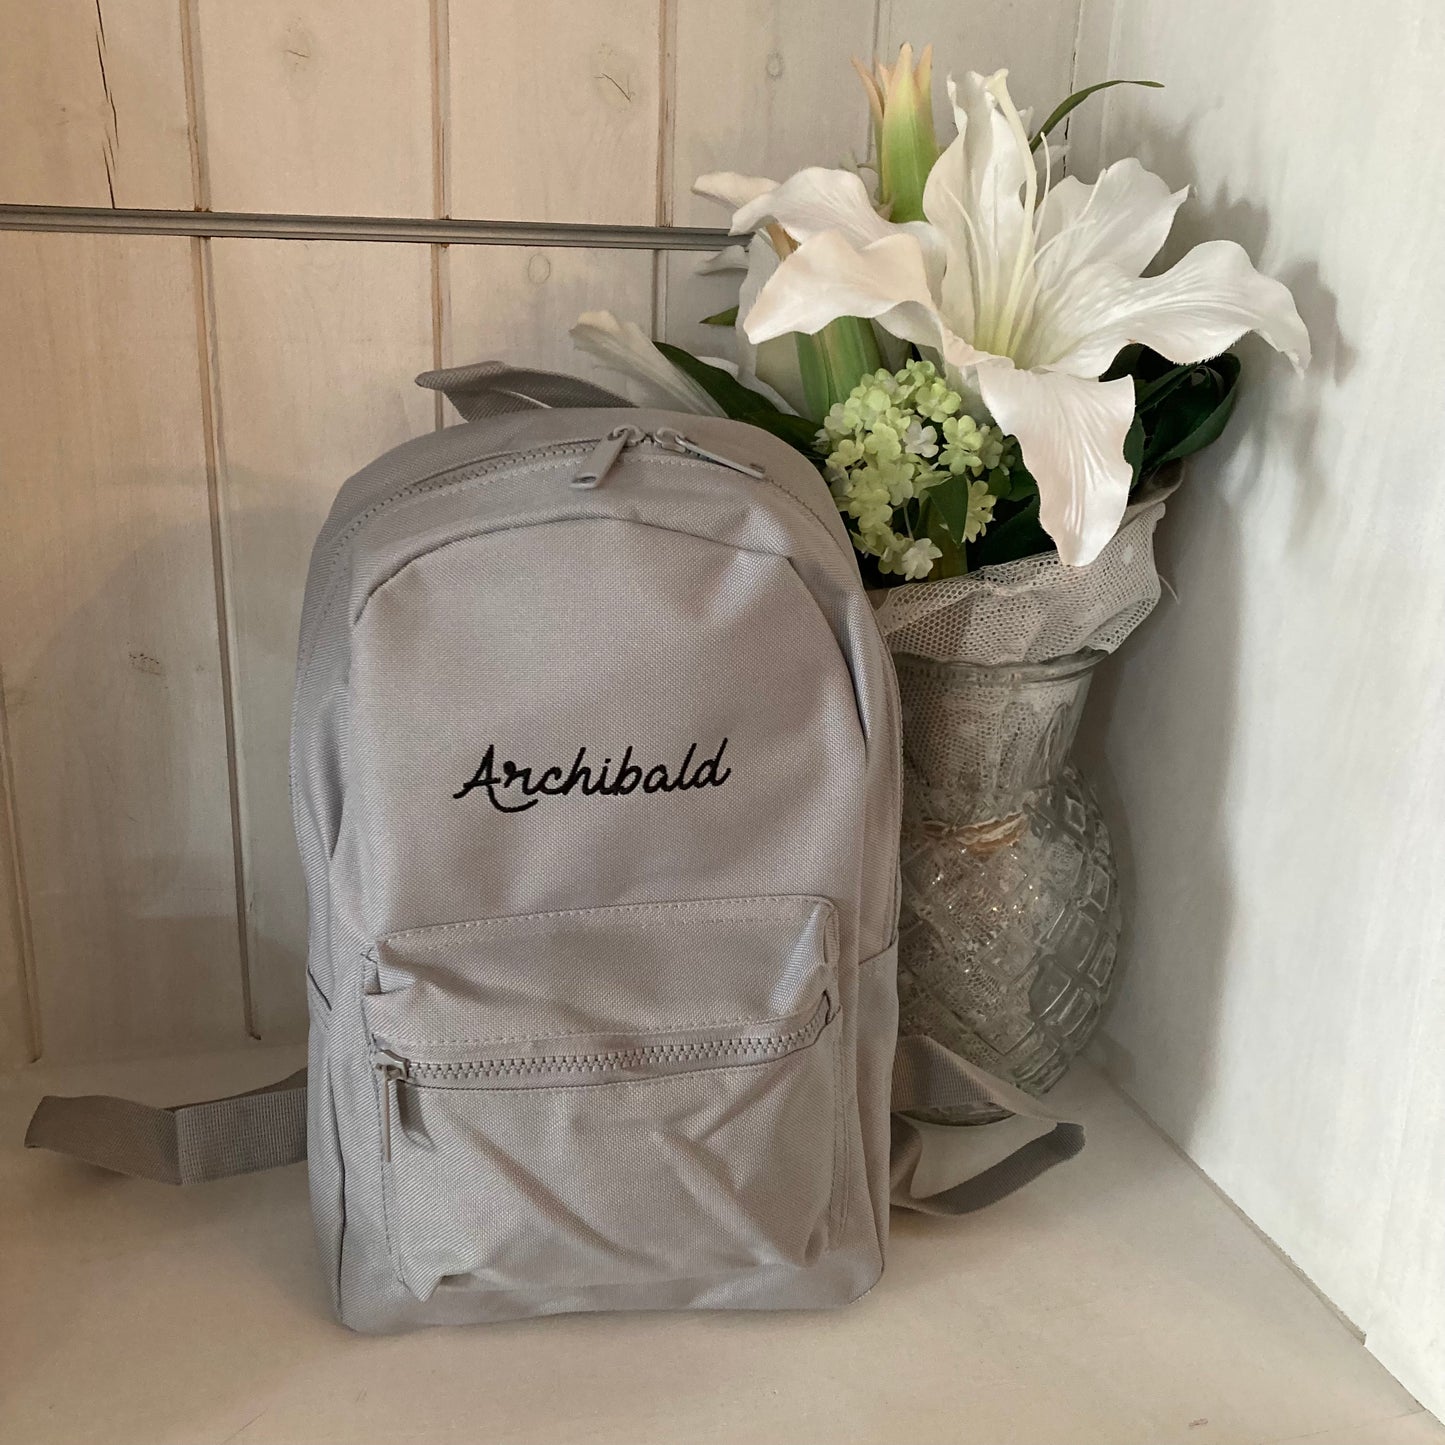 Mini Essential Fashion Backpack grijs